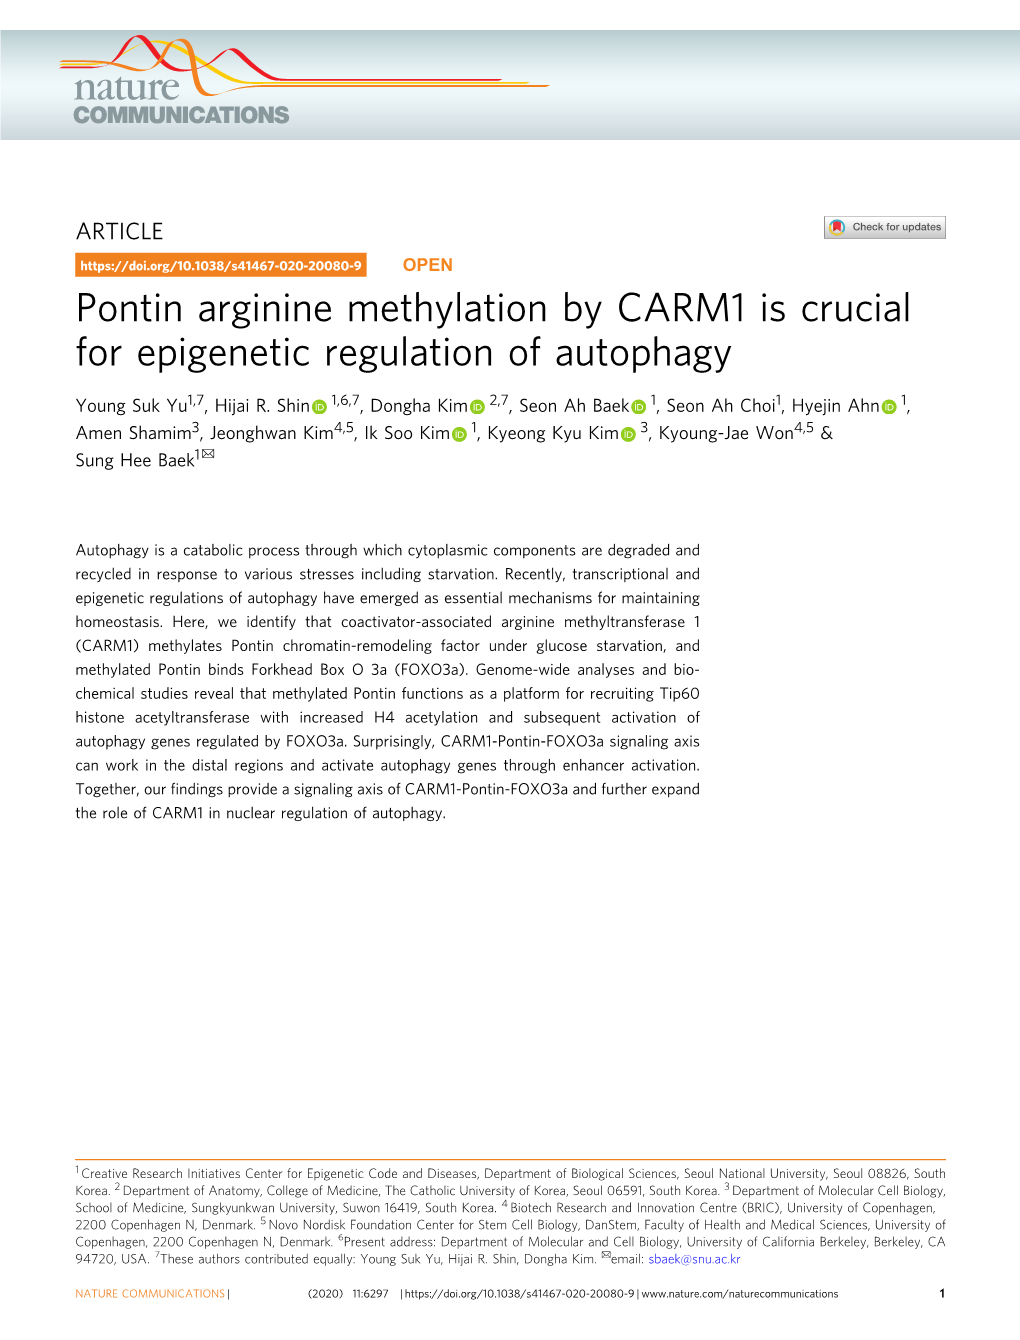 Pontin Arginine Methylation by CARM1 Is Crucial for Epigenetic Regulation of Autophagy